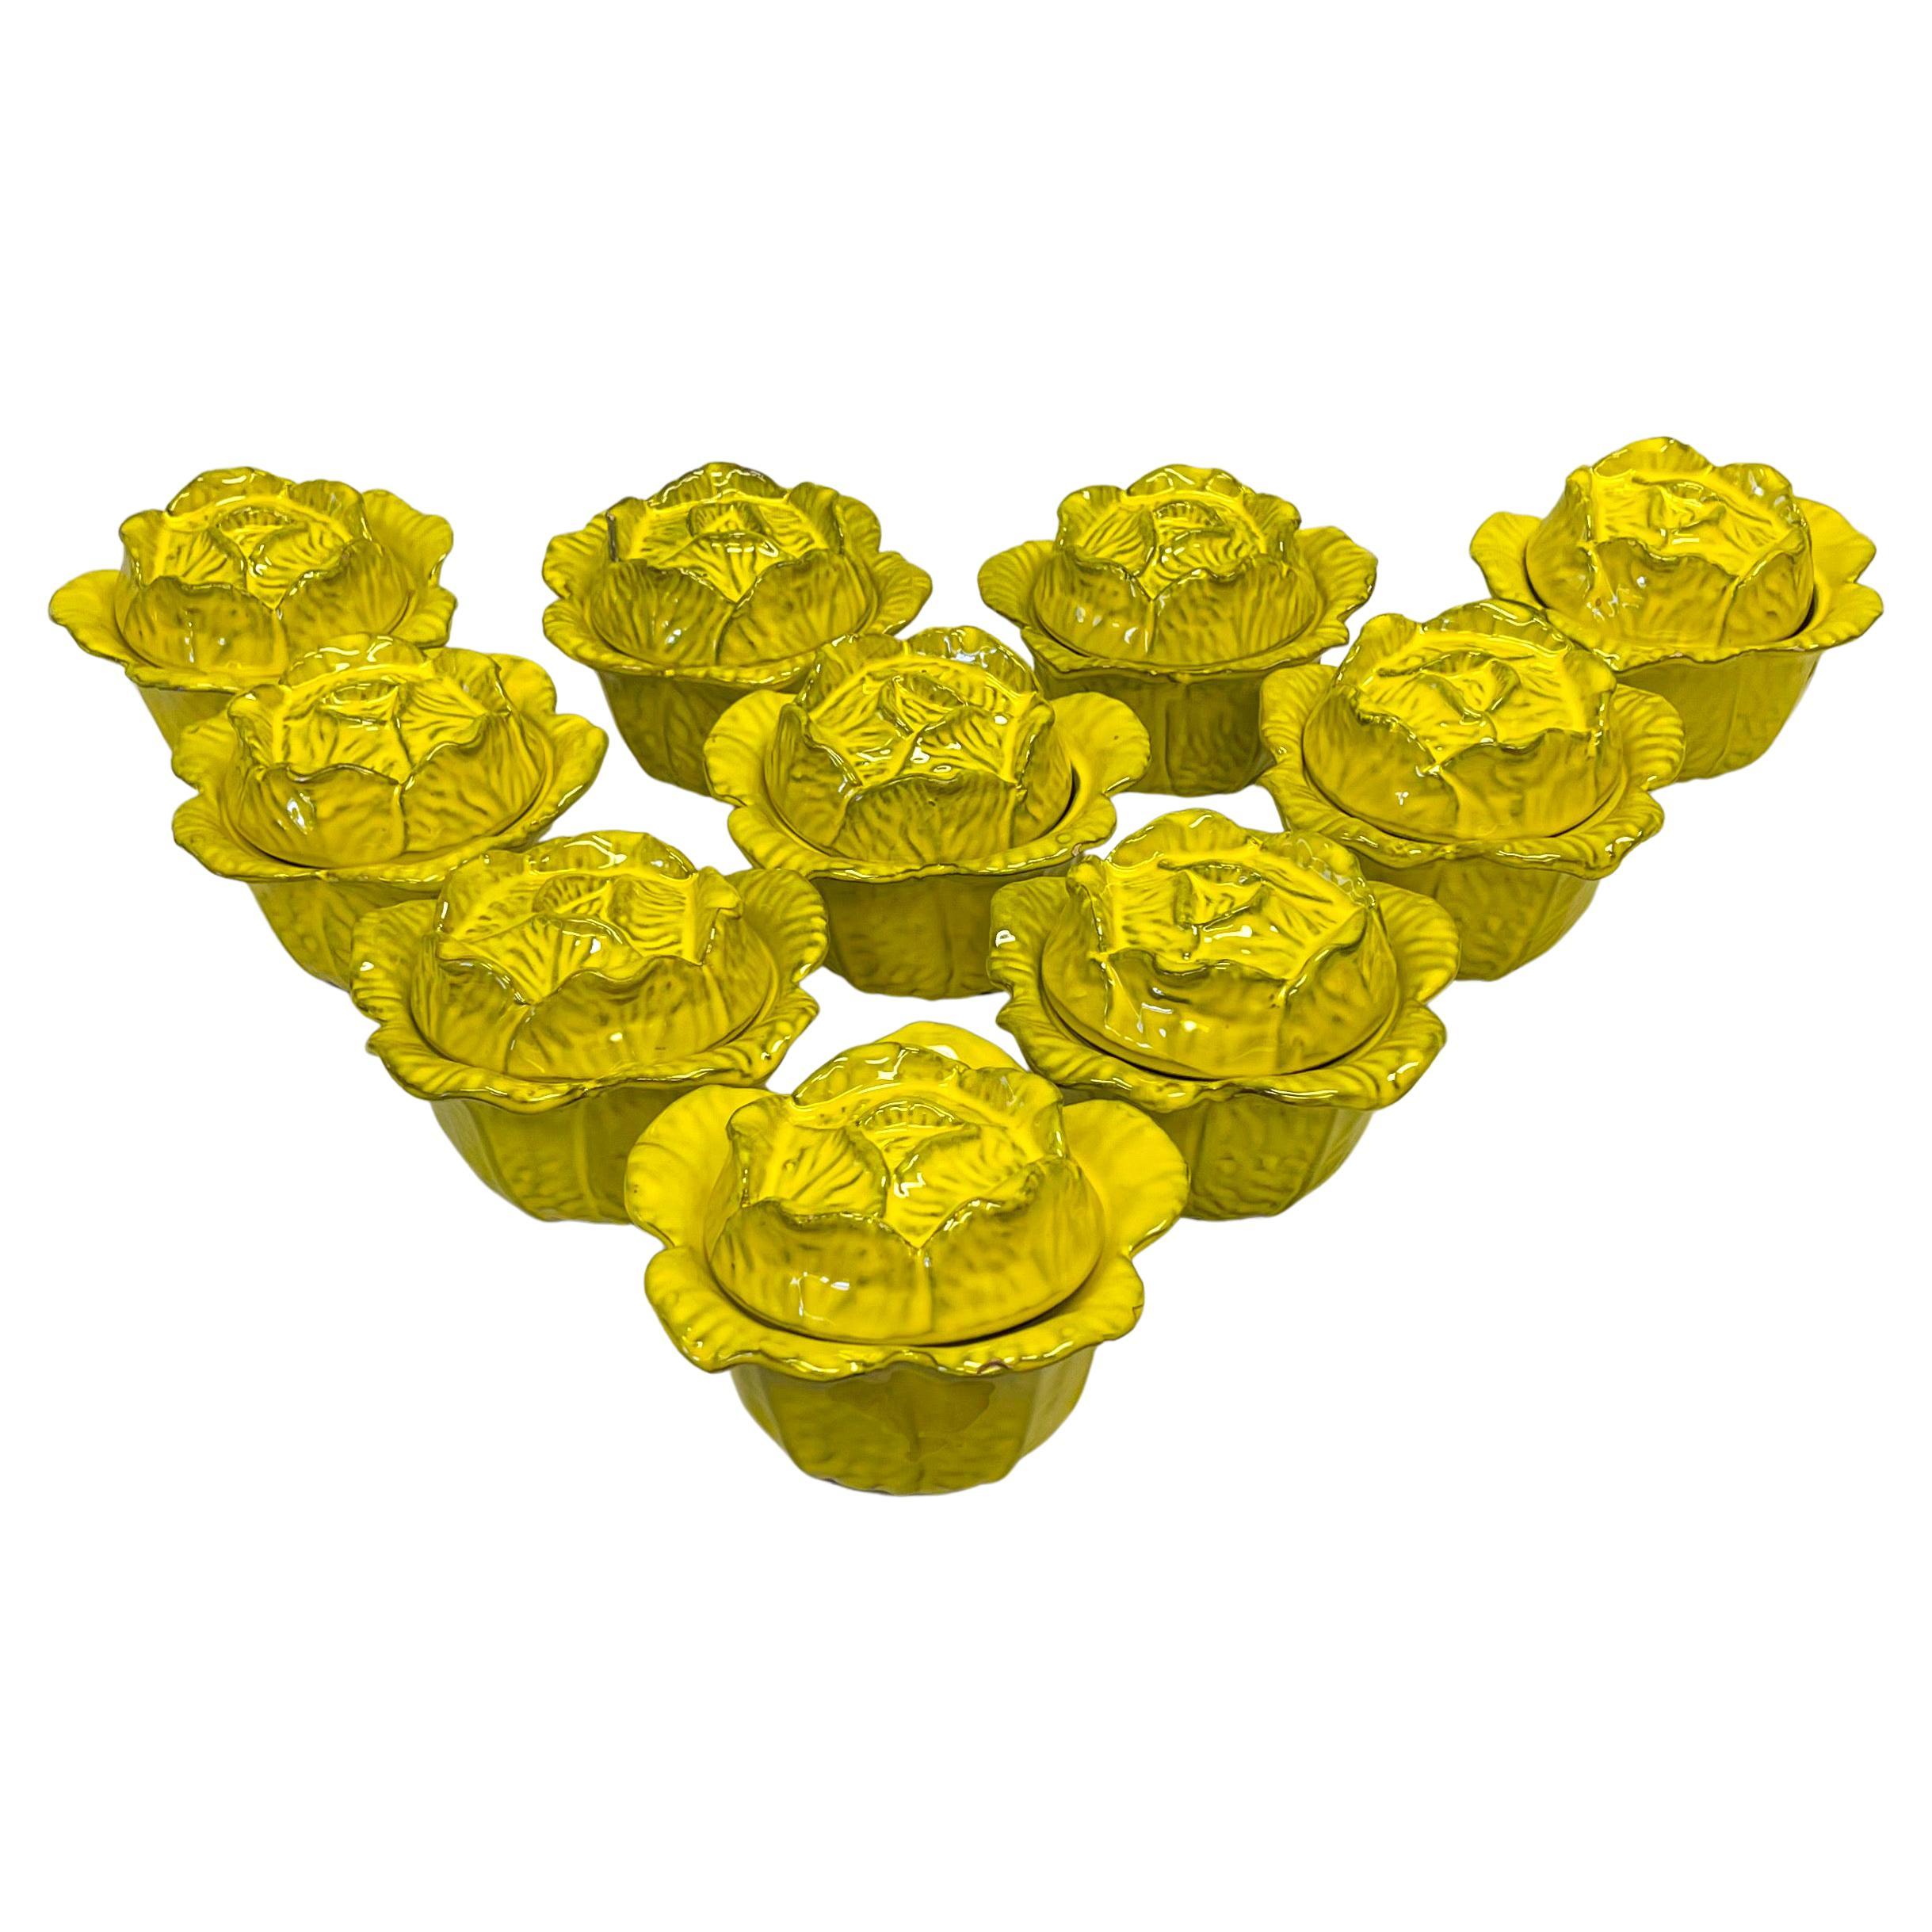 Italian Yellow Majolica Terracotta Pottery Cabbage Form Lidded Bowls, Set of 10